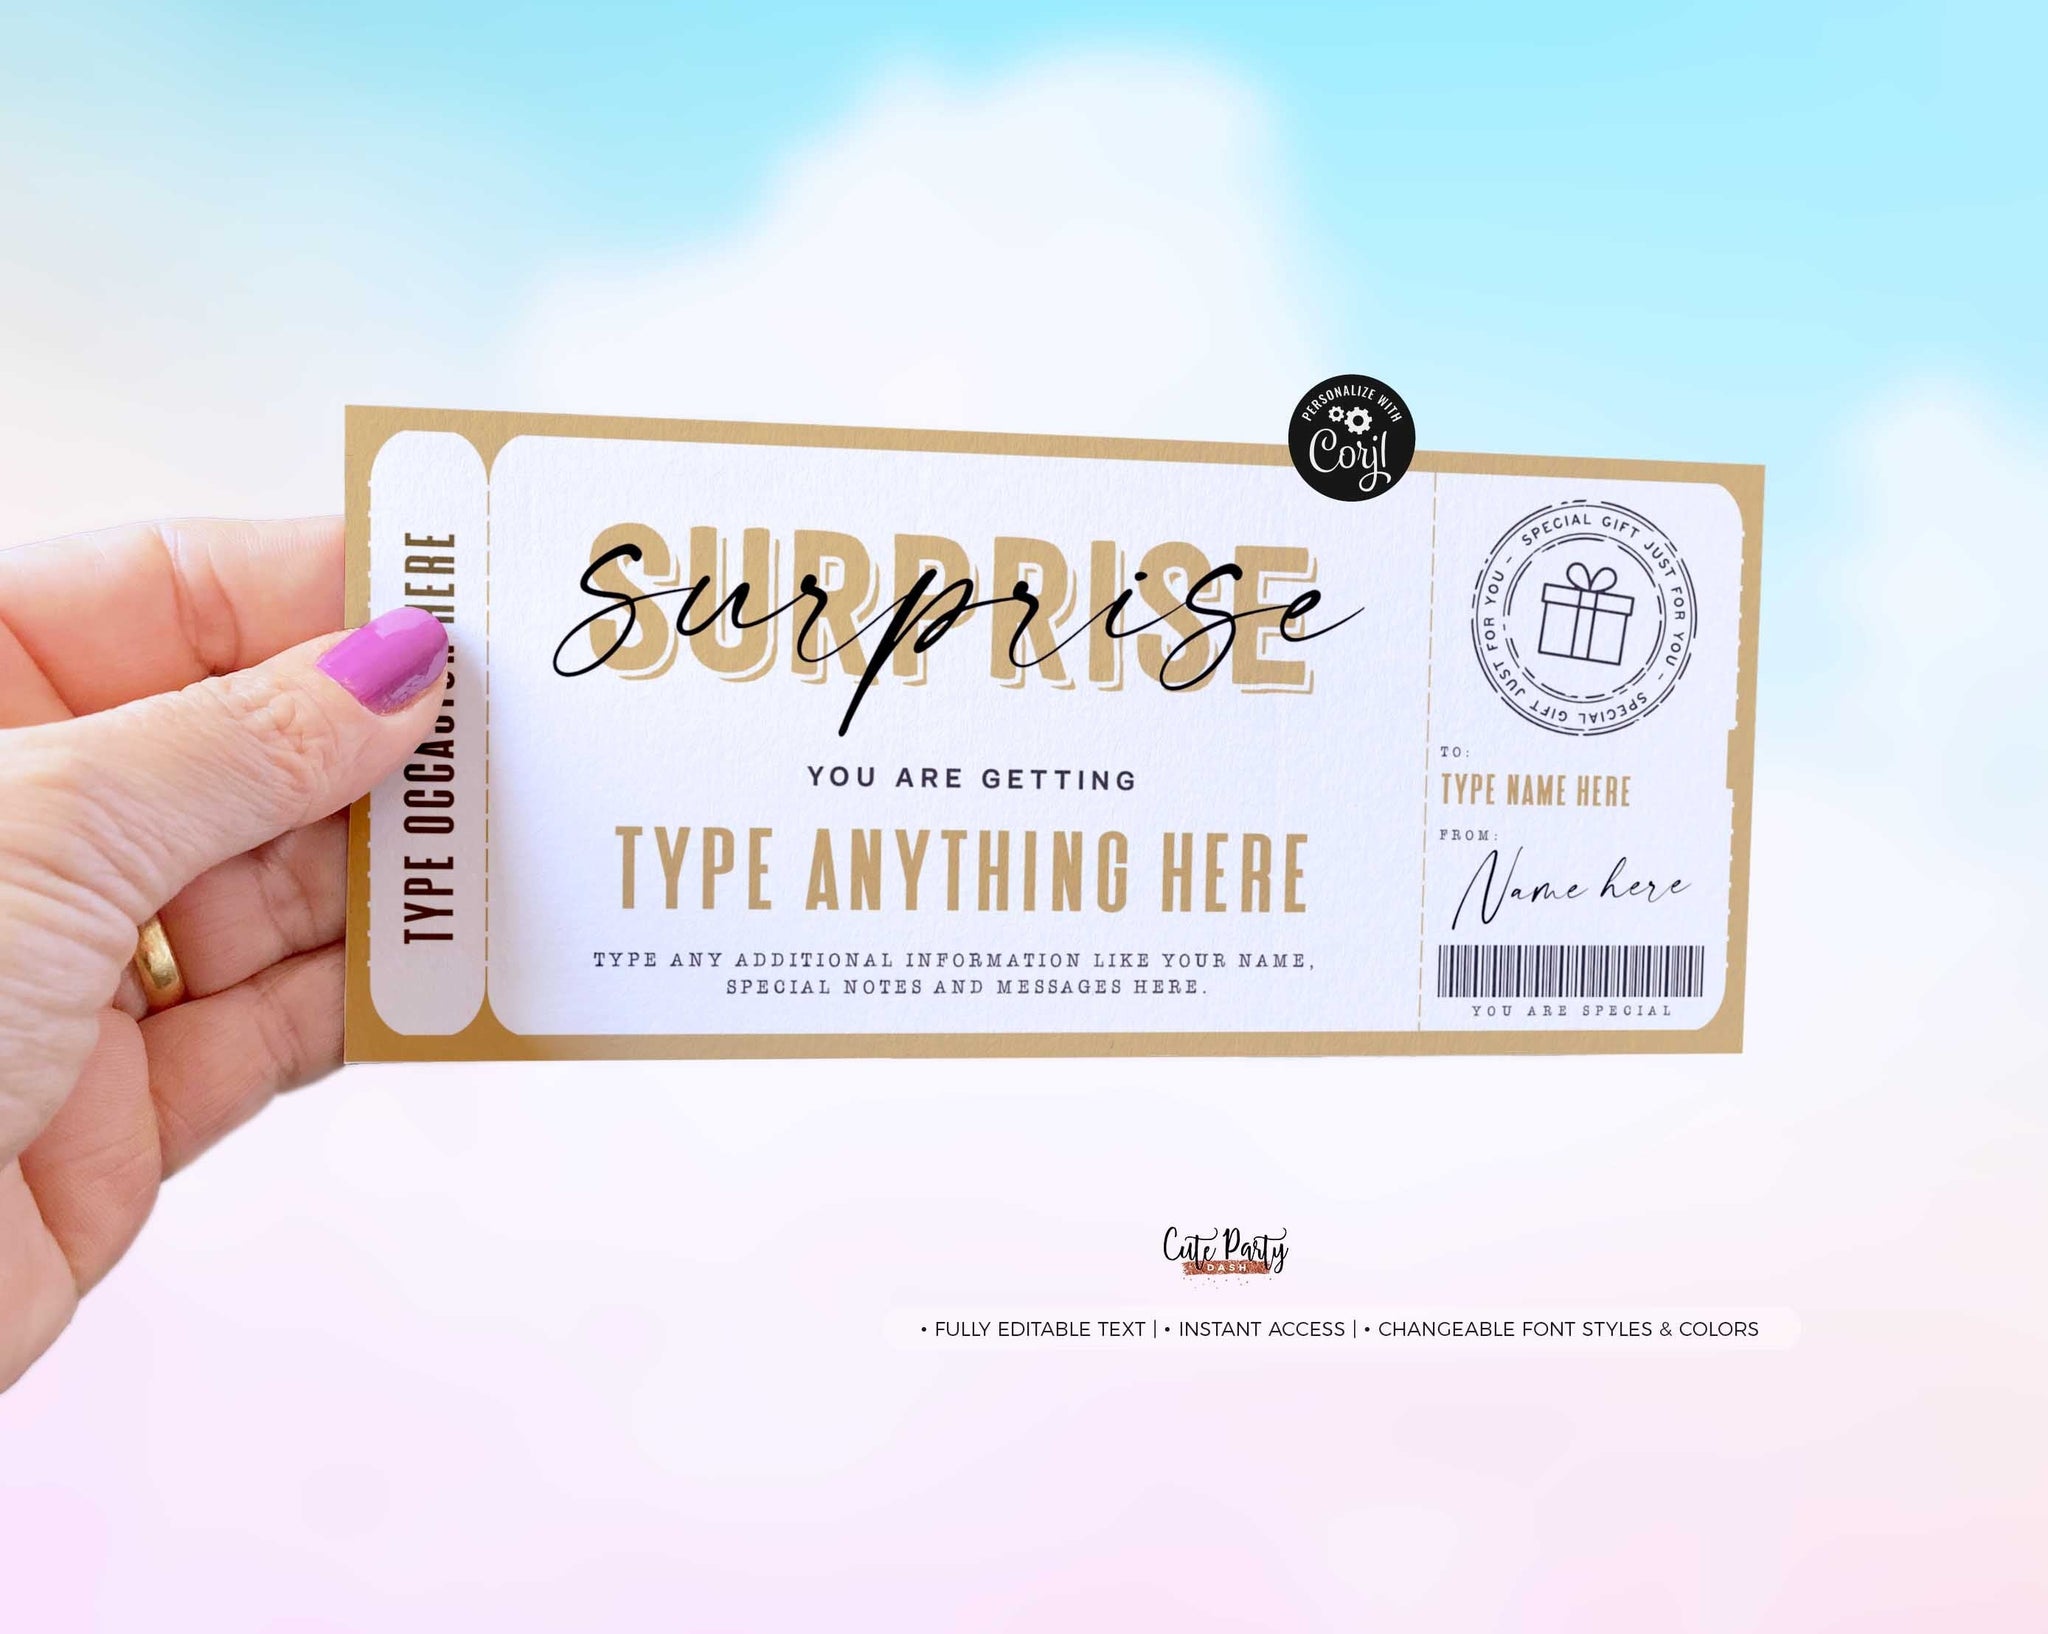 Surprise Birthday Gift Ticket Template, Editable Surprise Experience Ticket Voucher - Digital Download